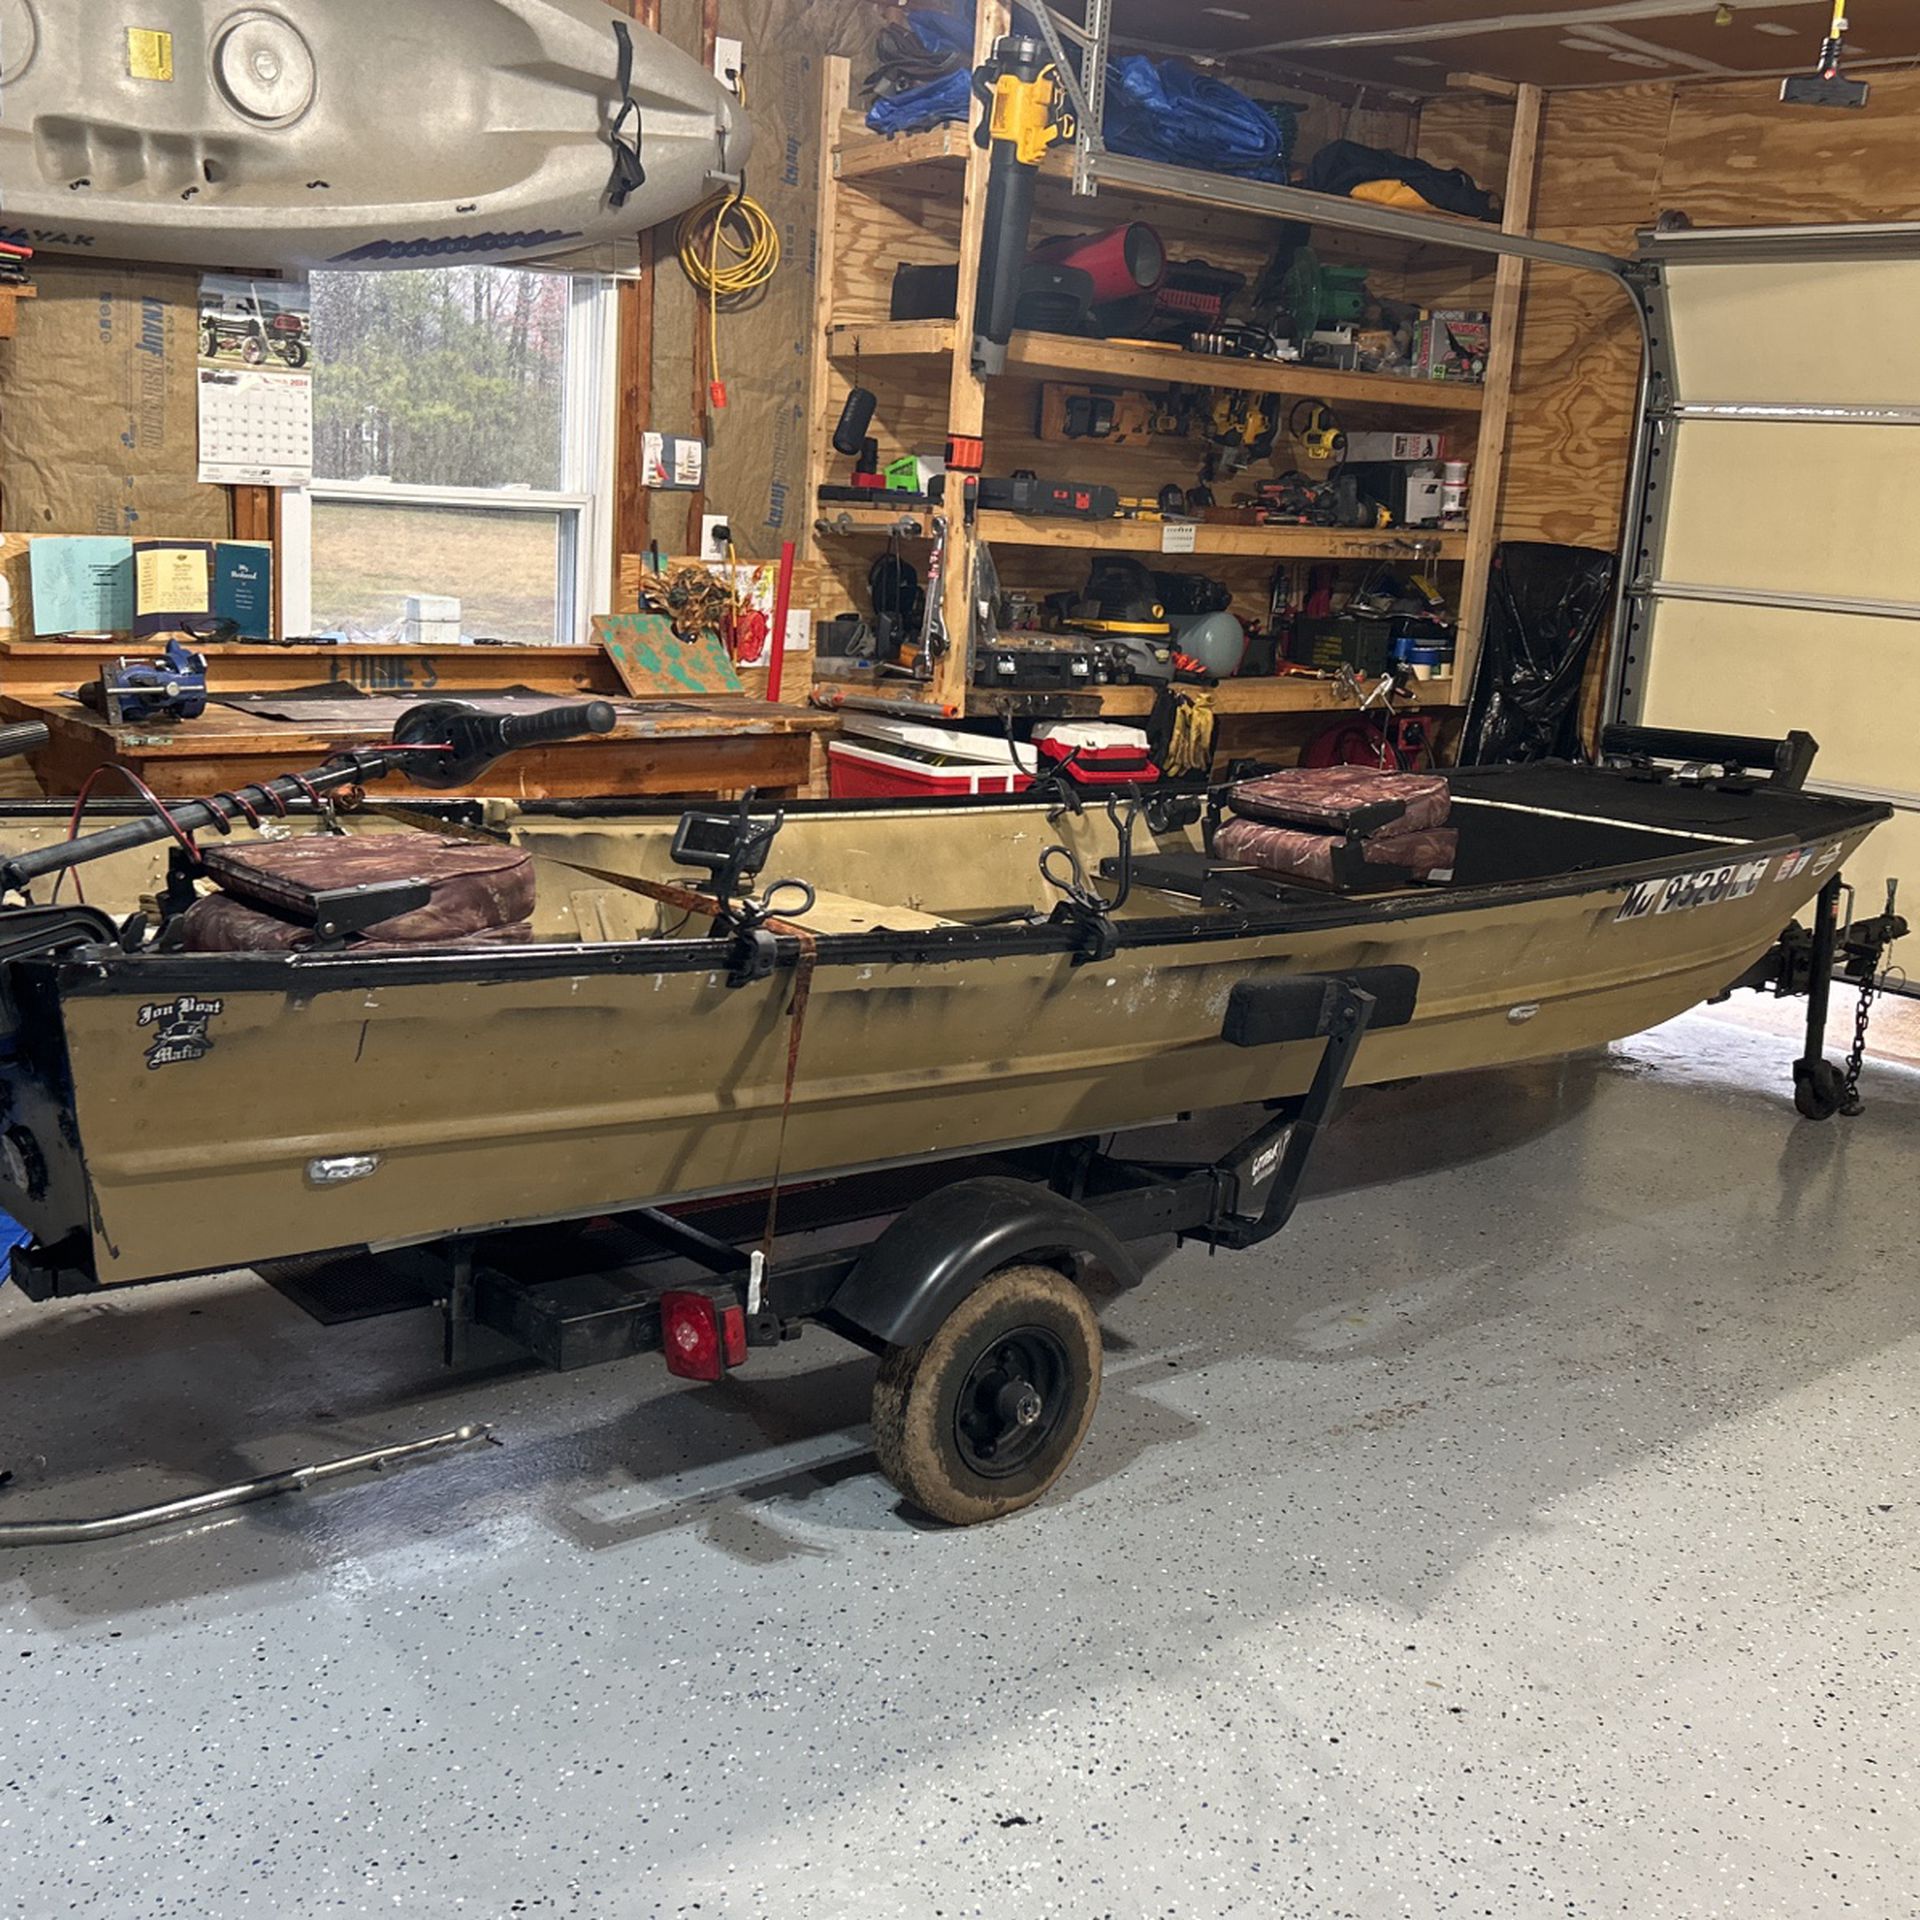 1452 Jon Boat $4500